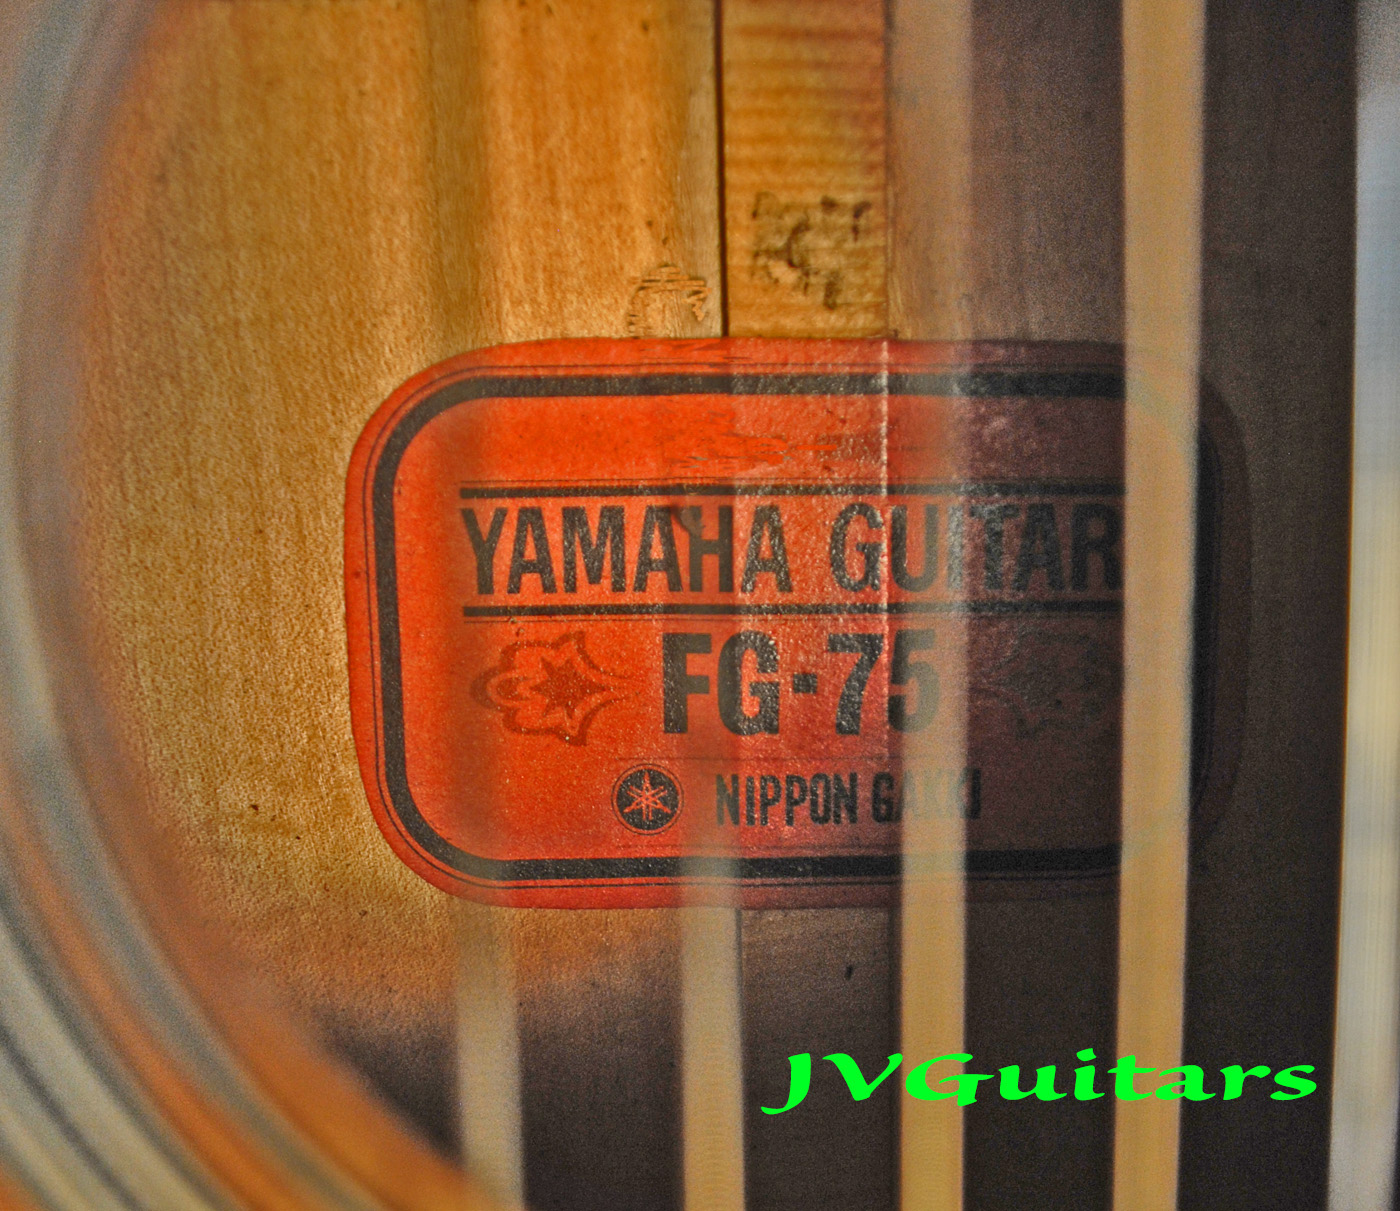 Yamaha Fg 75 Red Label Value